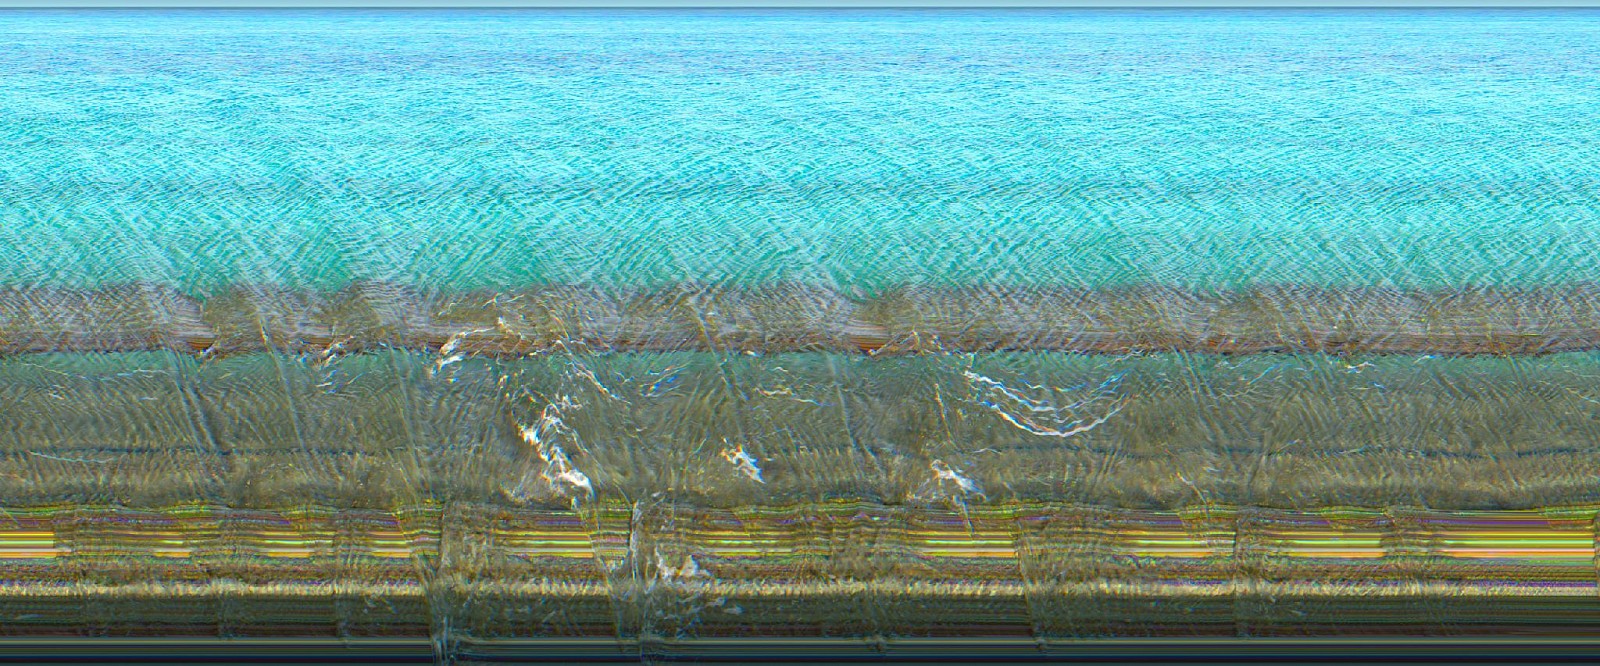 Jay Mark Johnson, COZUMEL WAVES #4, 2009 Cozumel MX
archival pigment on paper, mounted on aluminum, 40 x 96 in. (101.6 x 243.8 cm)